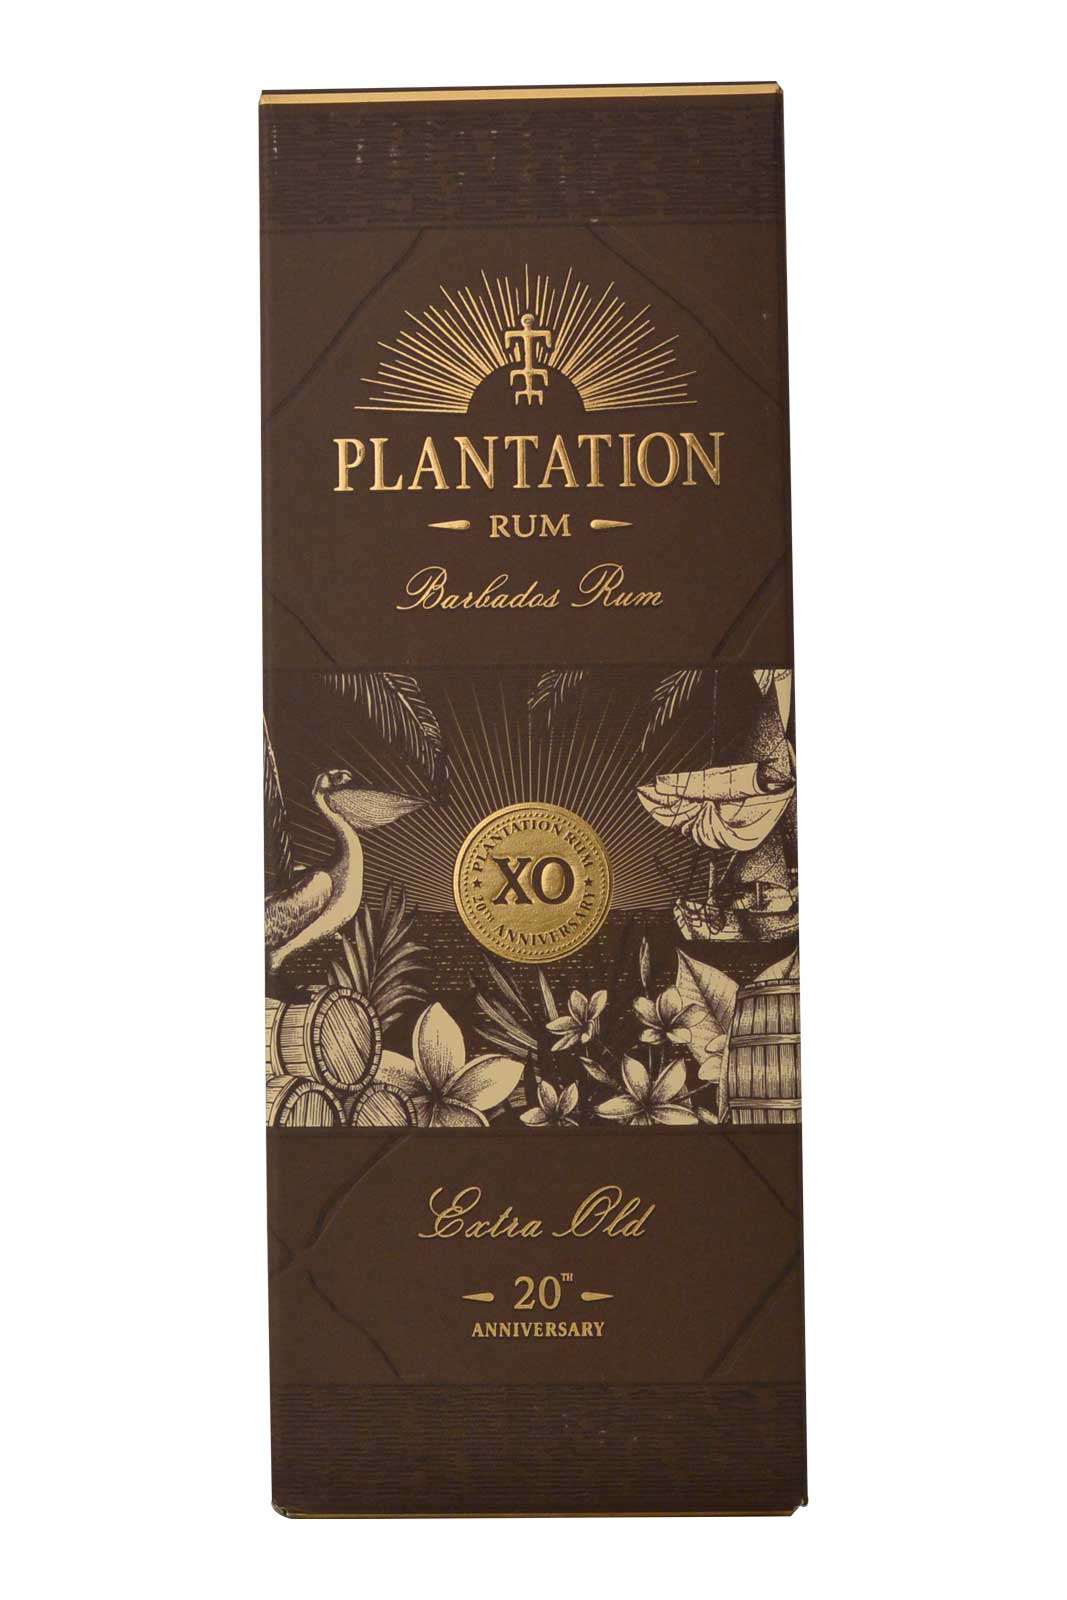 Plantation Rum Barbados Extra Old 20th Anniversary